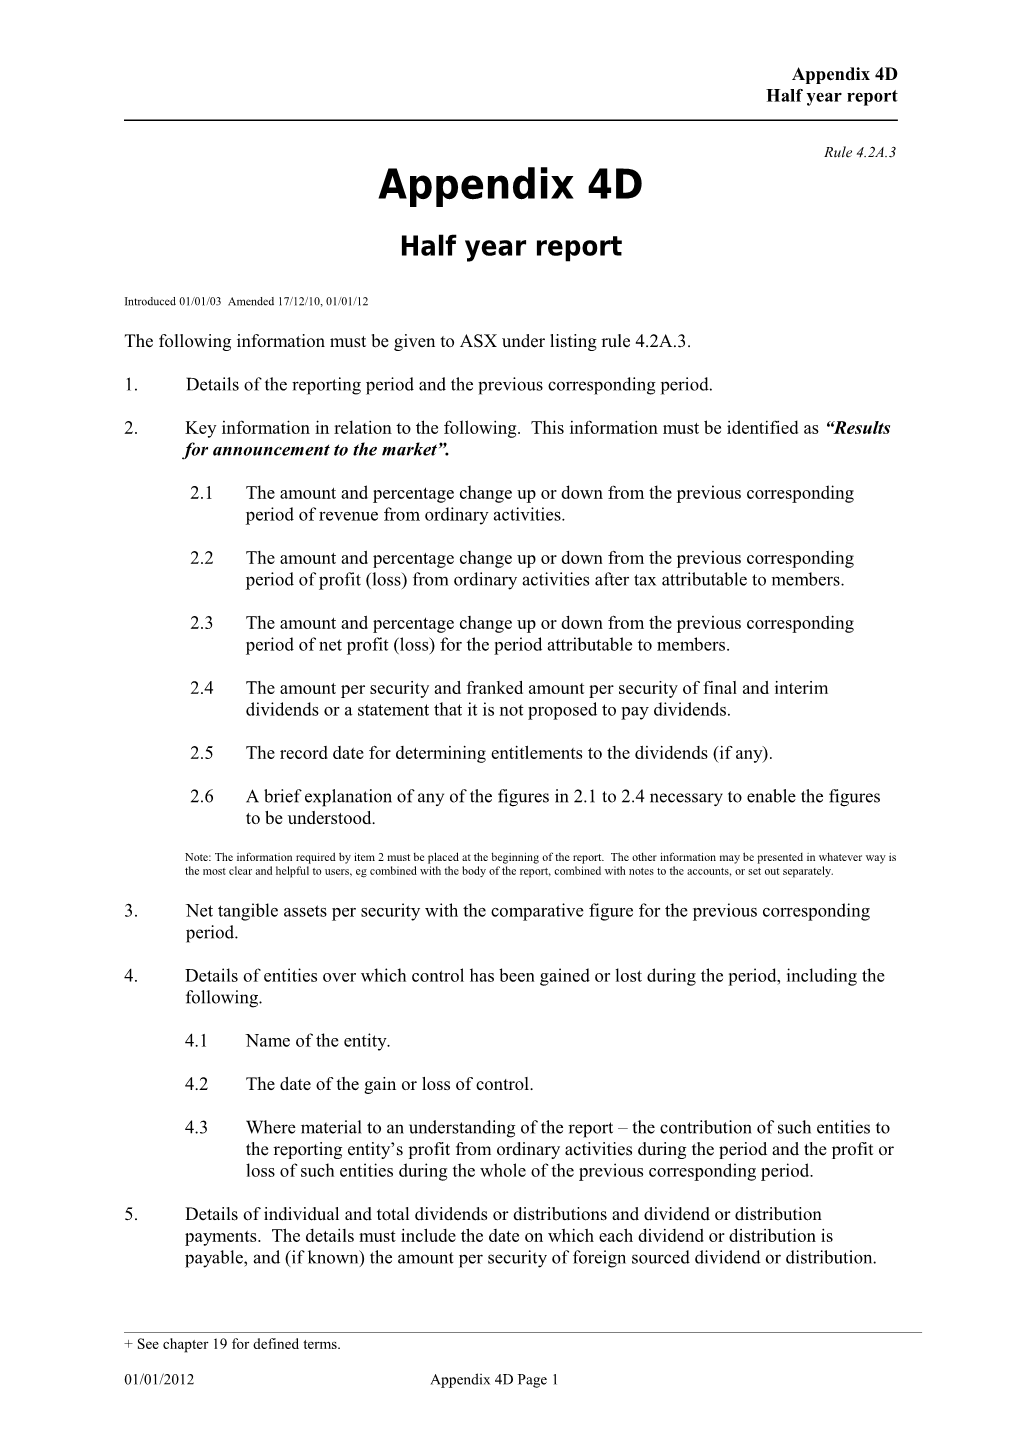 Half Year Report